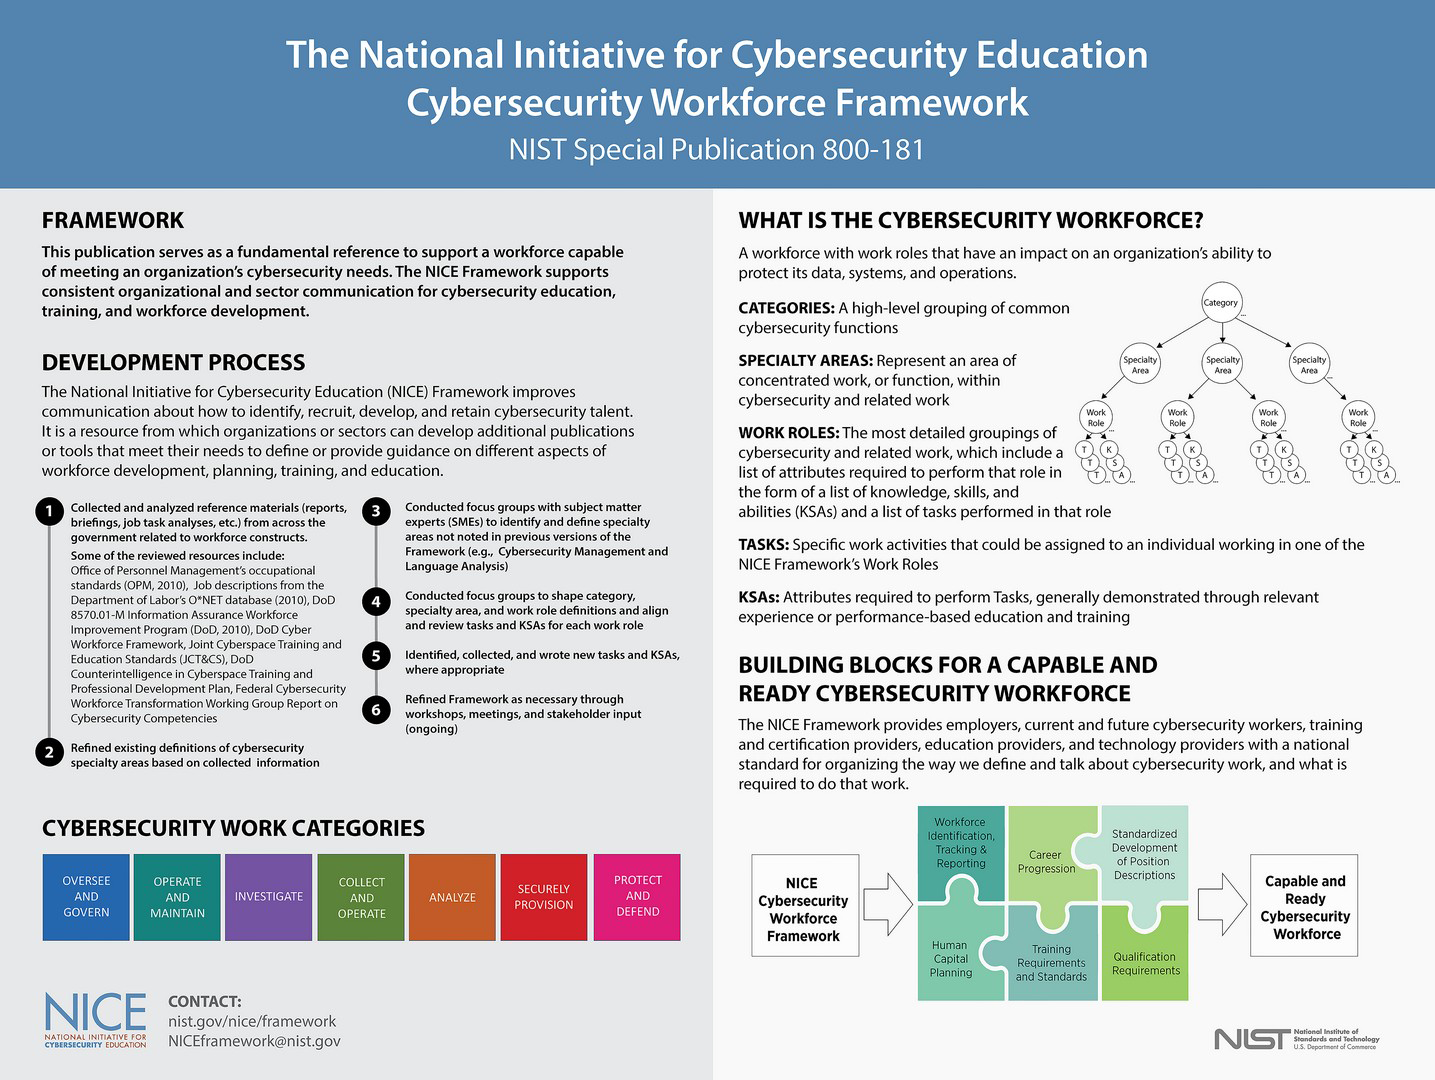  NICE Cybersecurity Workforce Framework. Click to enlarge. Source: https://www.nist.gov/image/niceframeworkposterpng 